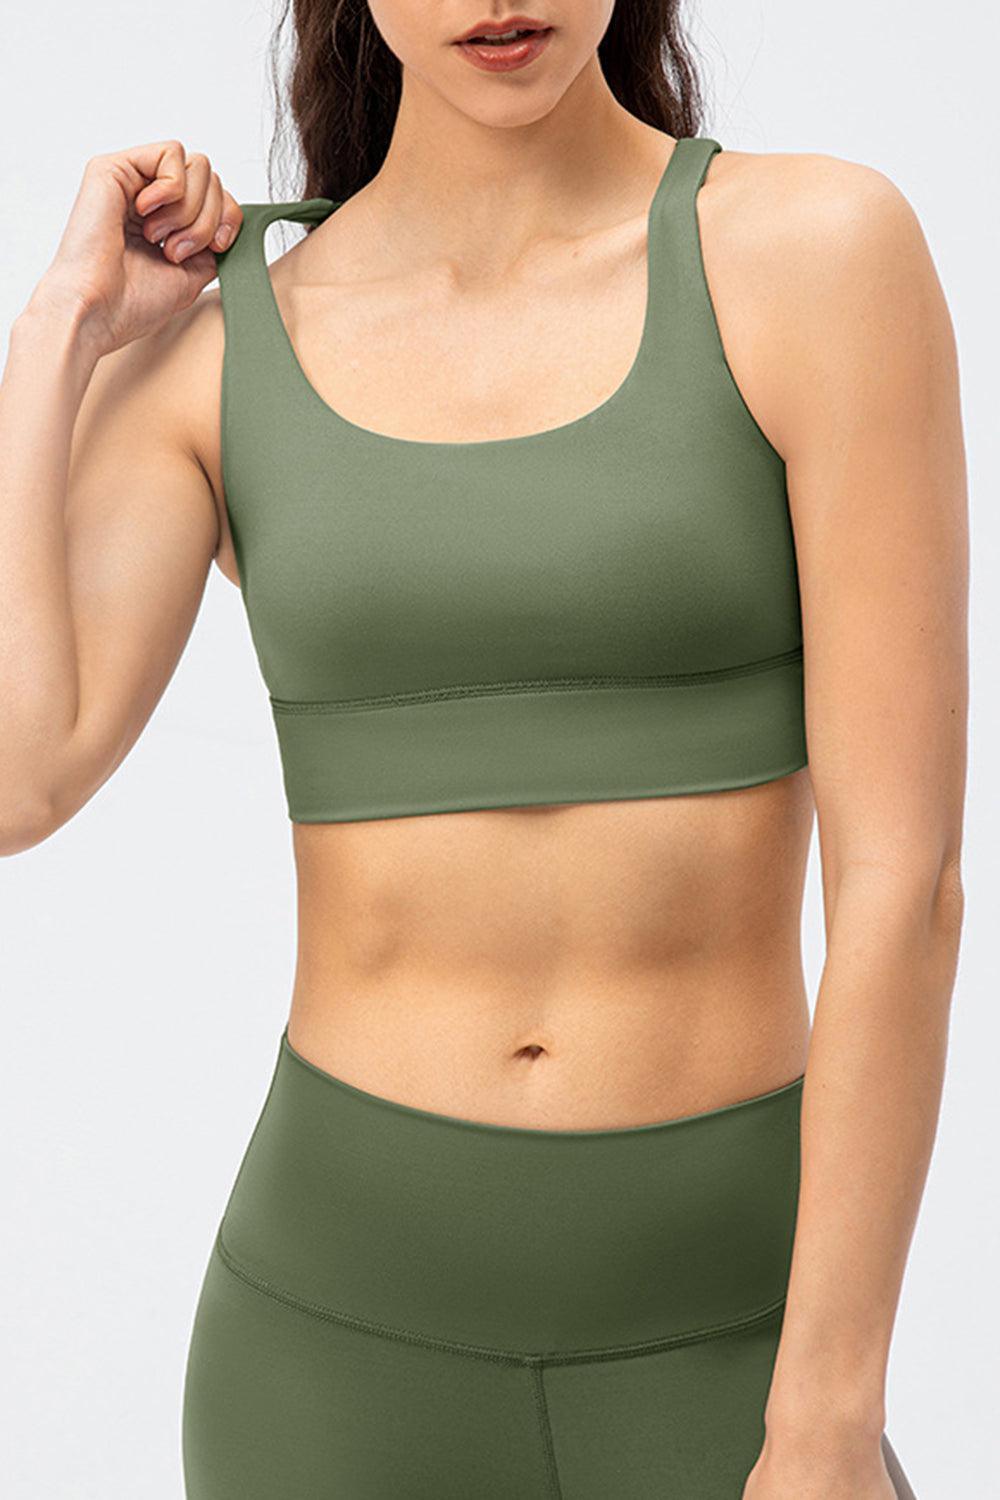 a woman in a green sports bra top